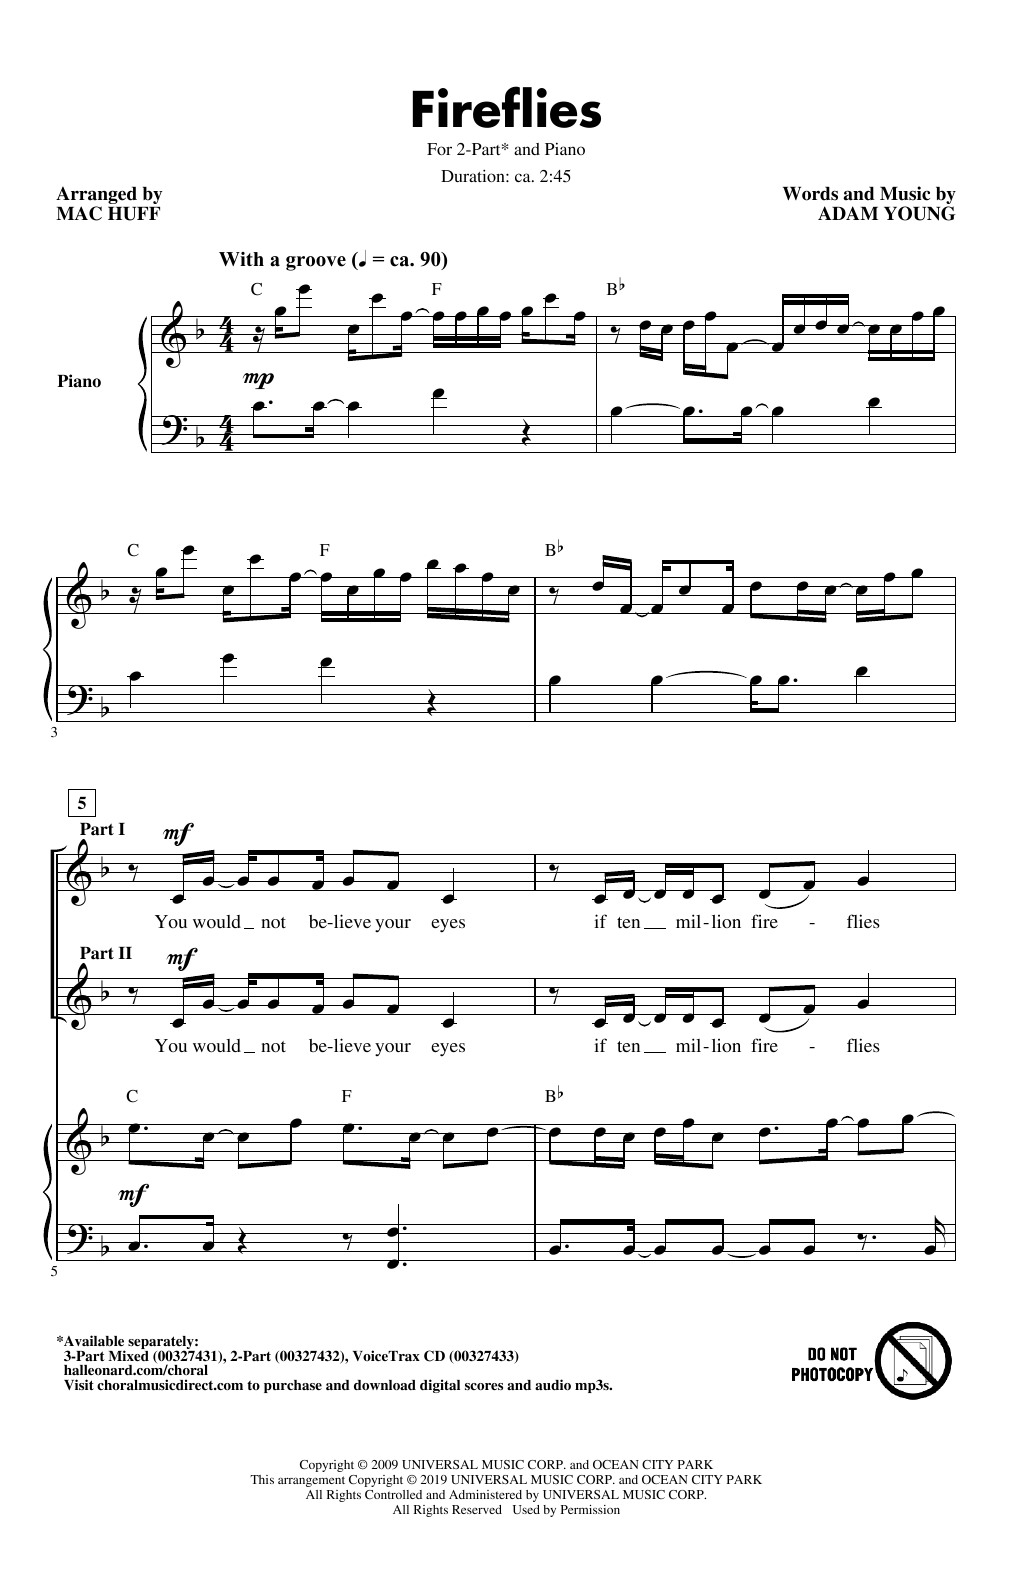 Owl City Fireflies (arr. Mac Huff) Sheet Music Notes & Chords for 3-Part Mixed Choir - Download or Print PDF